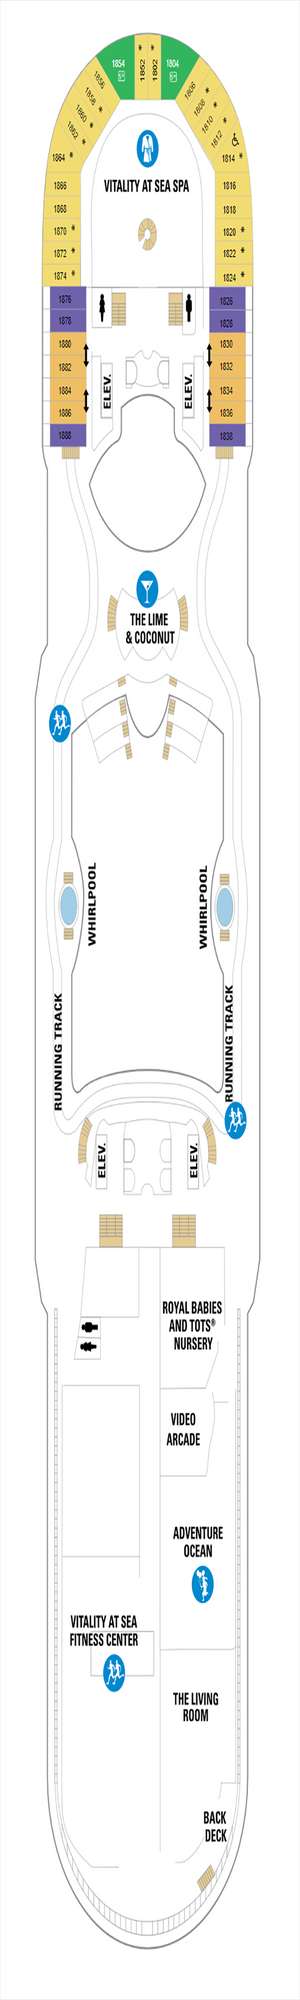 Deck plan for Navigator of the Seas